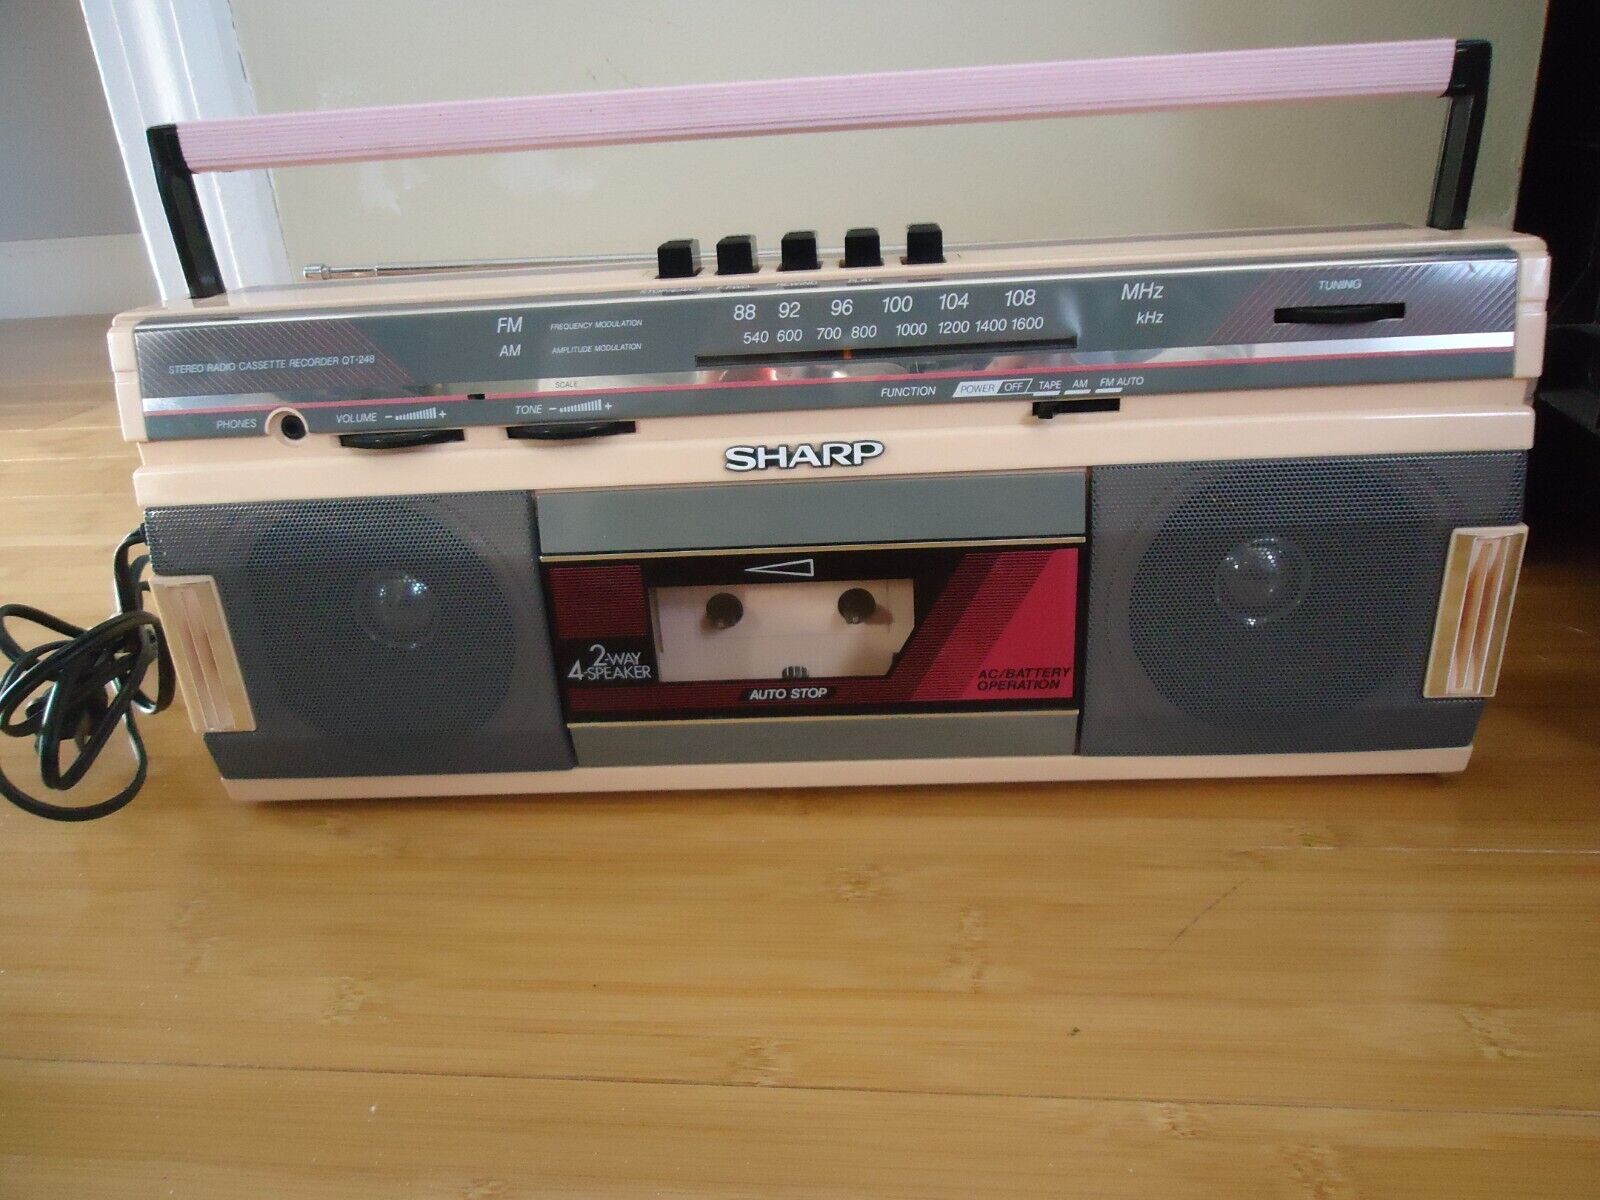 Pink Sharp QT-248 AM/FM Cassette Boom Box, 1980s - Tested, Radio working